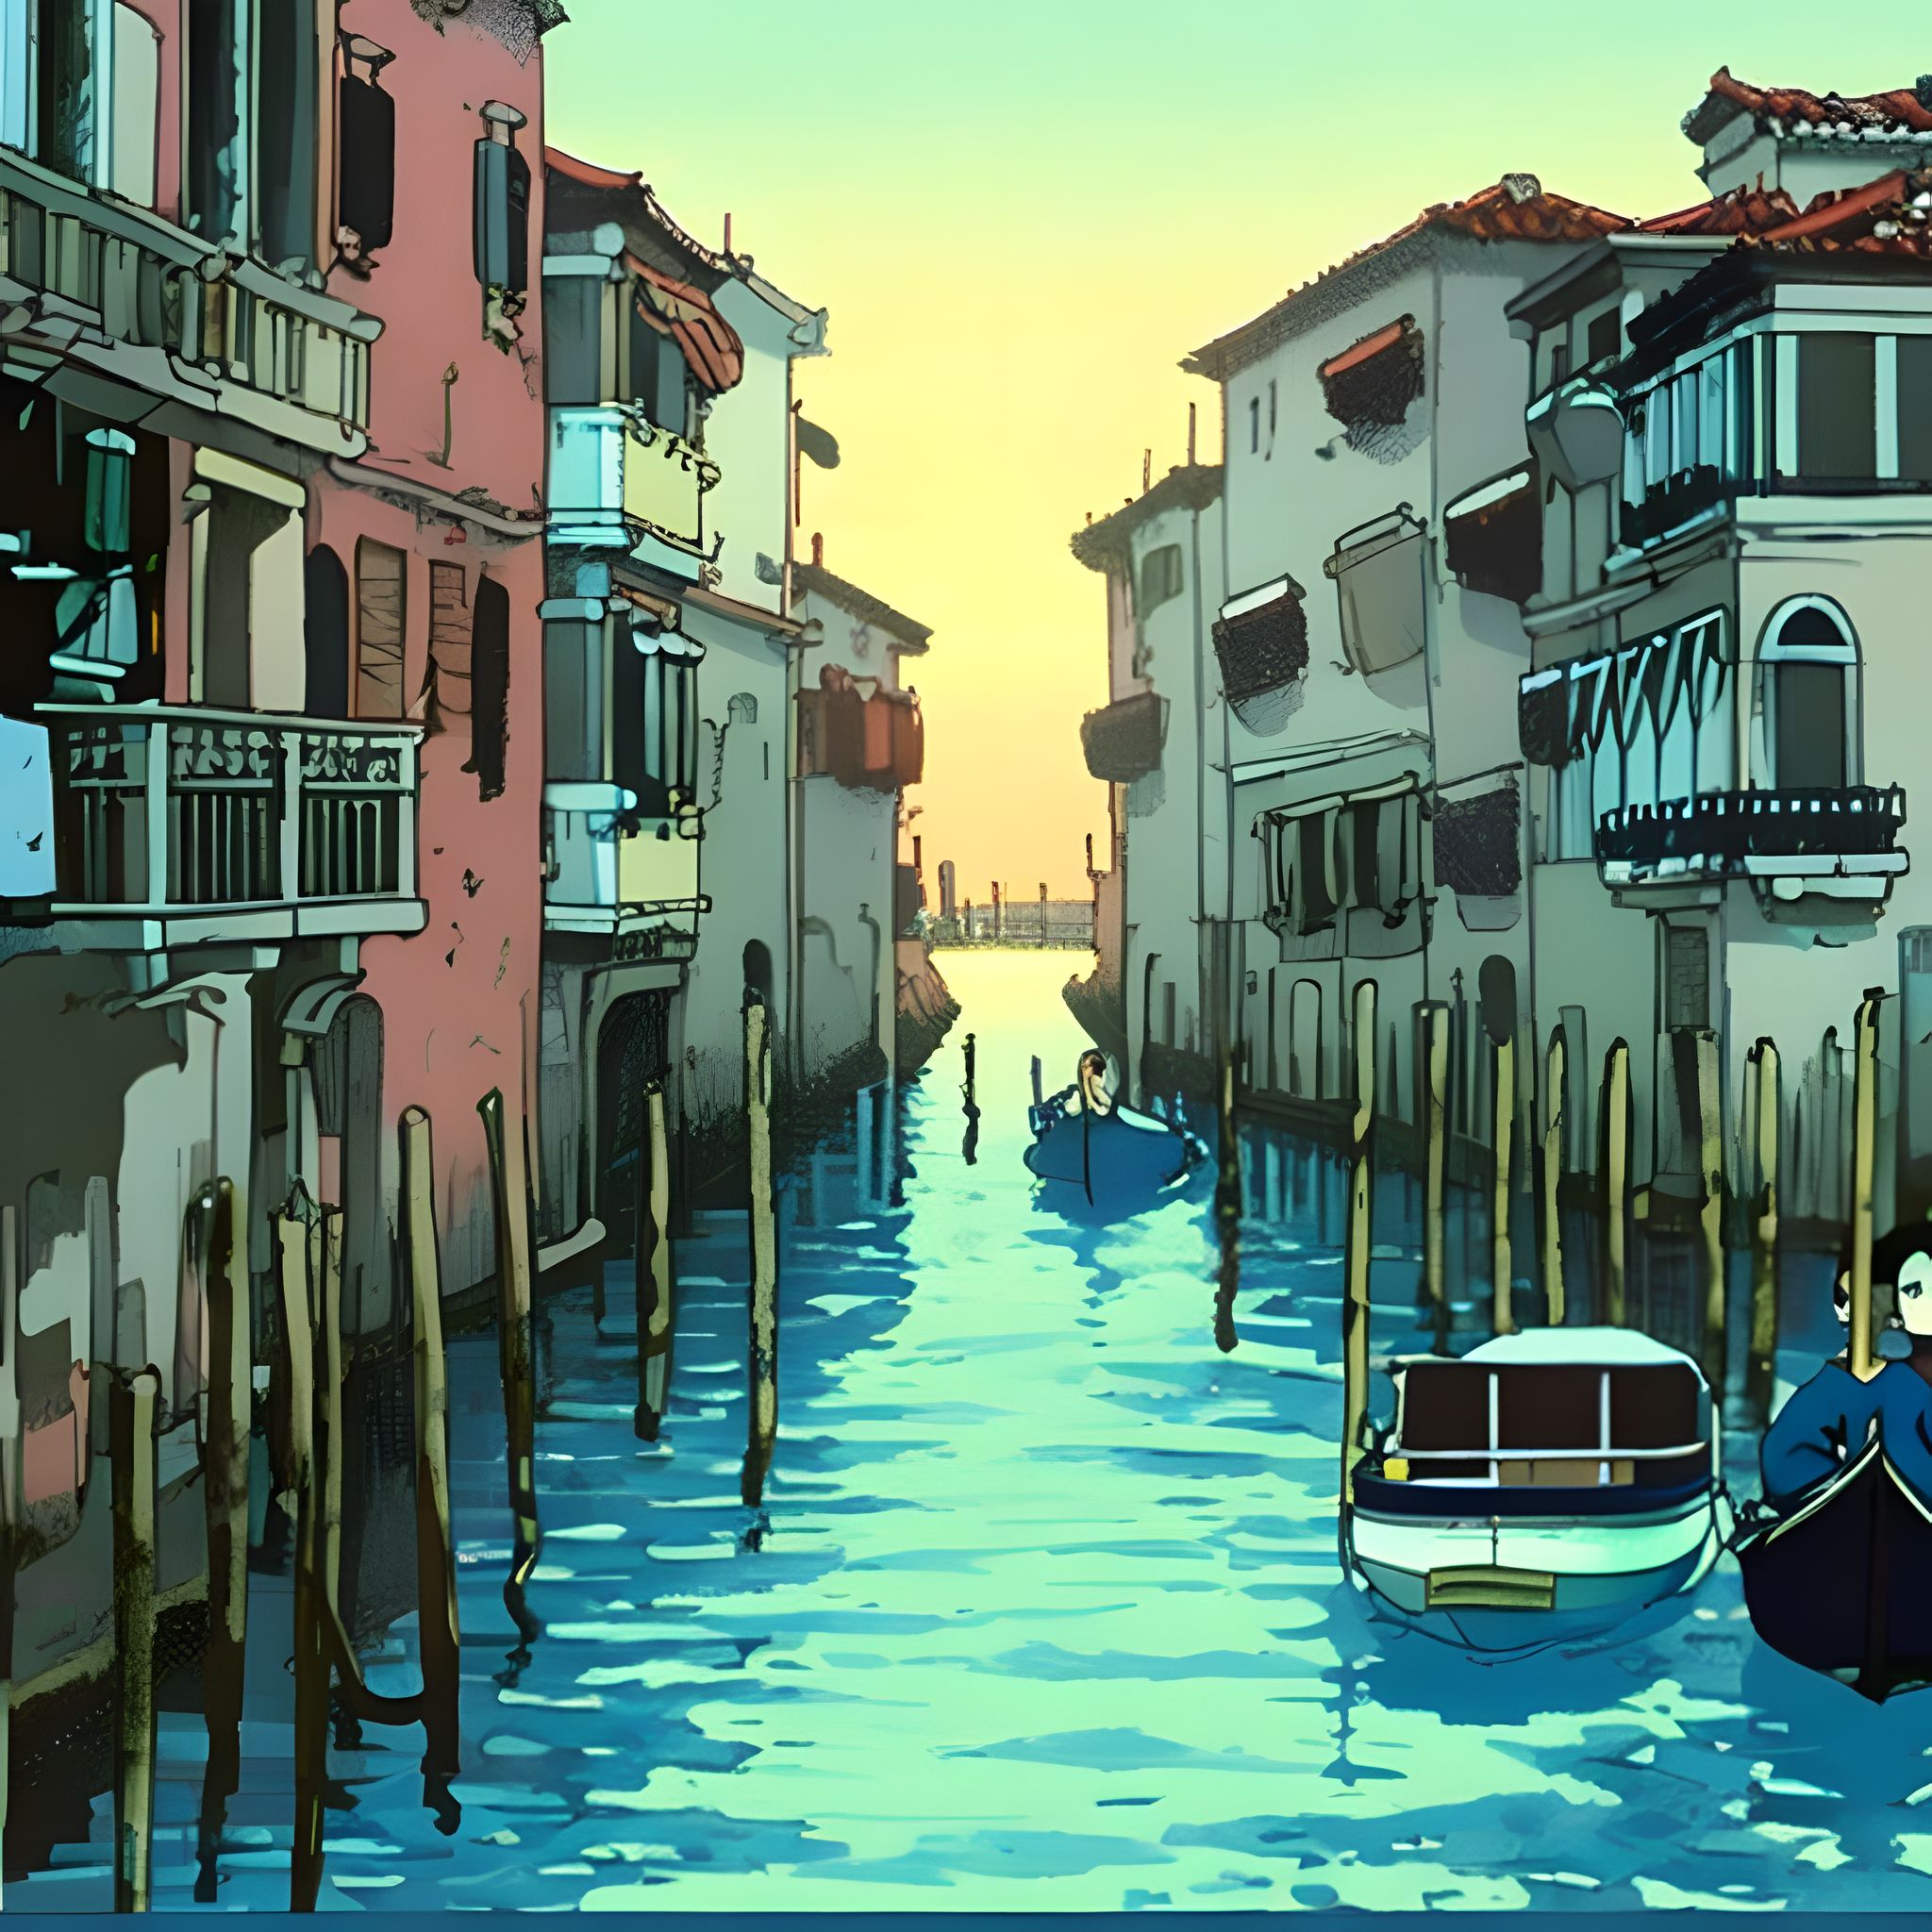 Cinematic-scene-in-Venice-directed-by-hayao-miyazaki-studio-ghibli-anime-winter-cold-night-st74